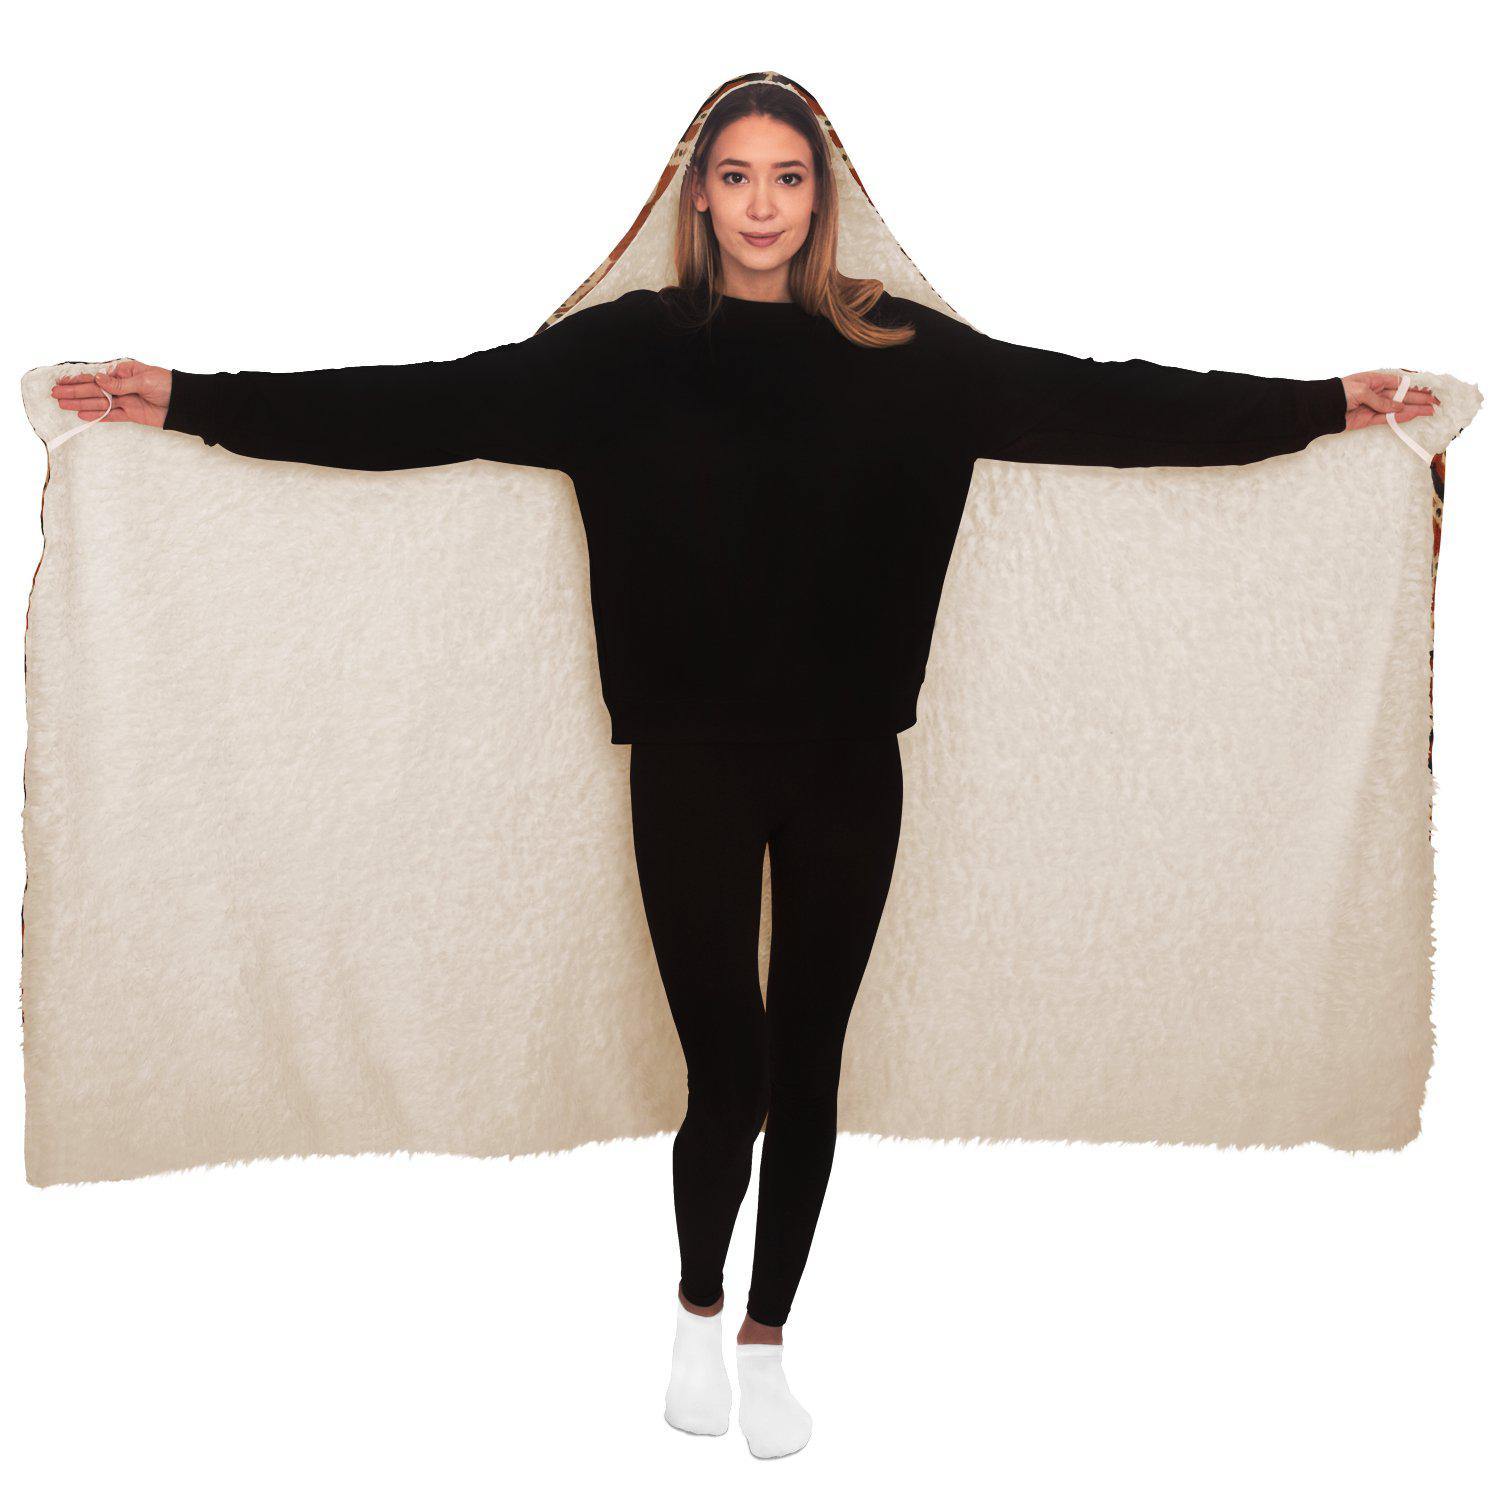 Hooded Blanket - AOP Hooded Blanket, Indonesian Ikat Design